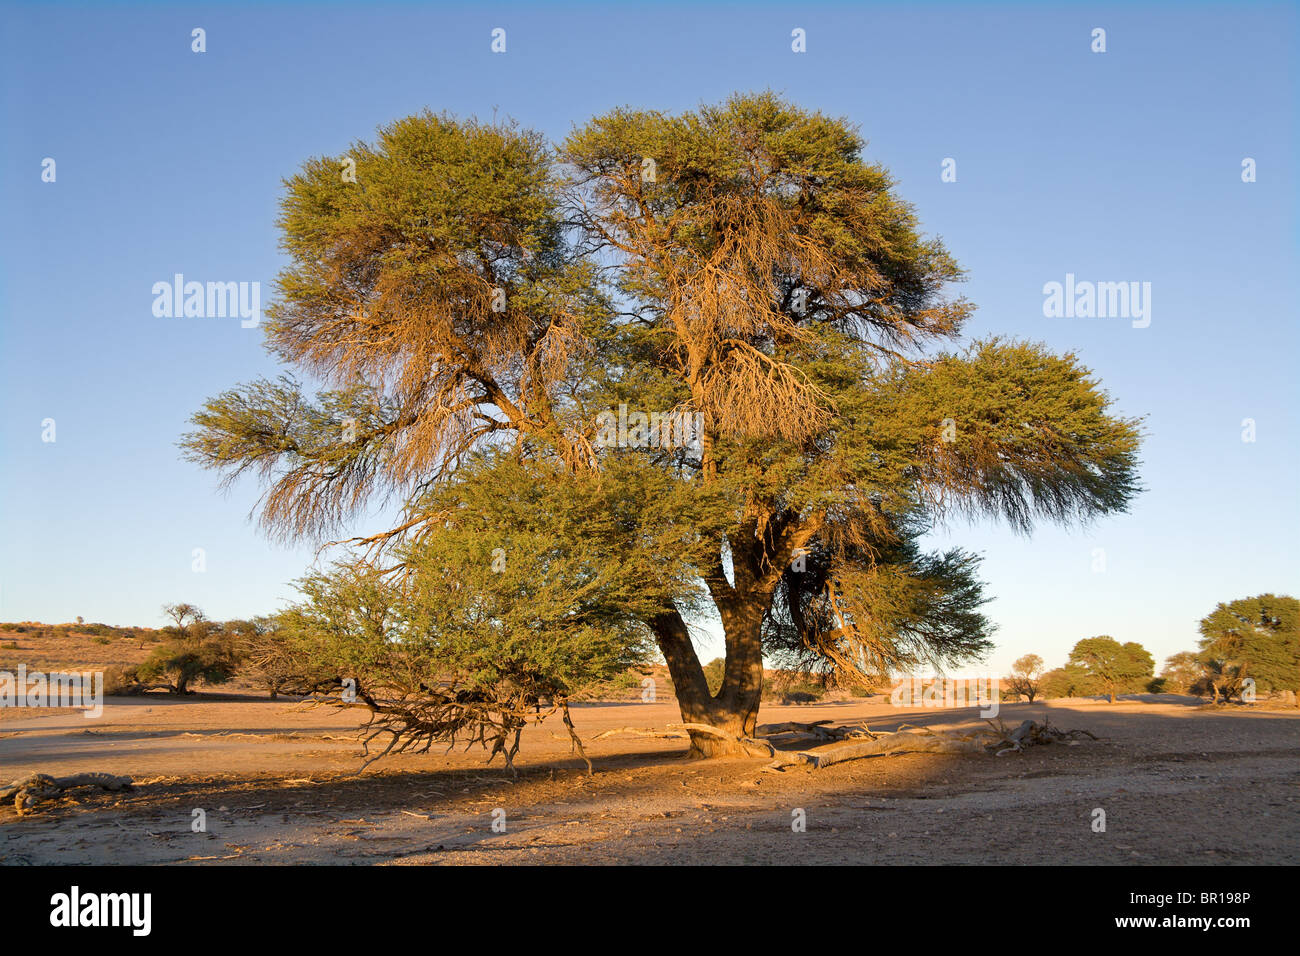 African landscape with a camelthorn Acacia tree (Acacia erioloba), Kgalagadi Transfrontier Park, South Africa Stock Photo